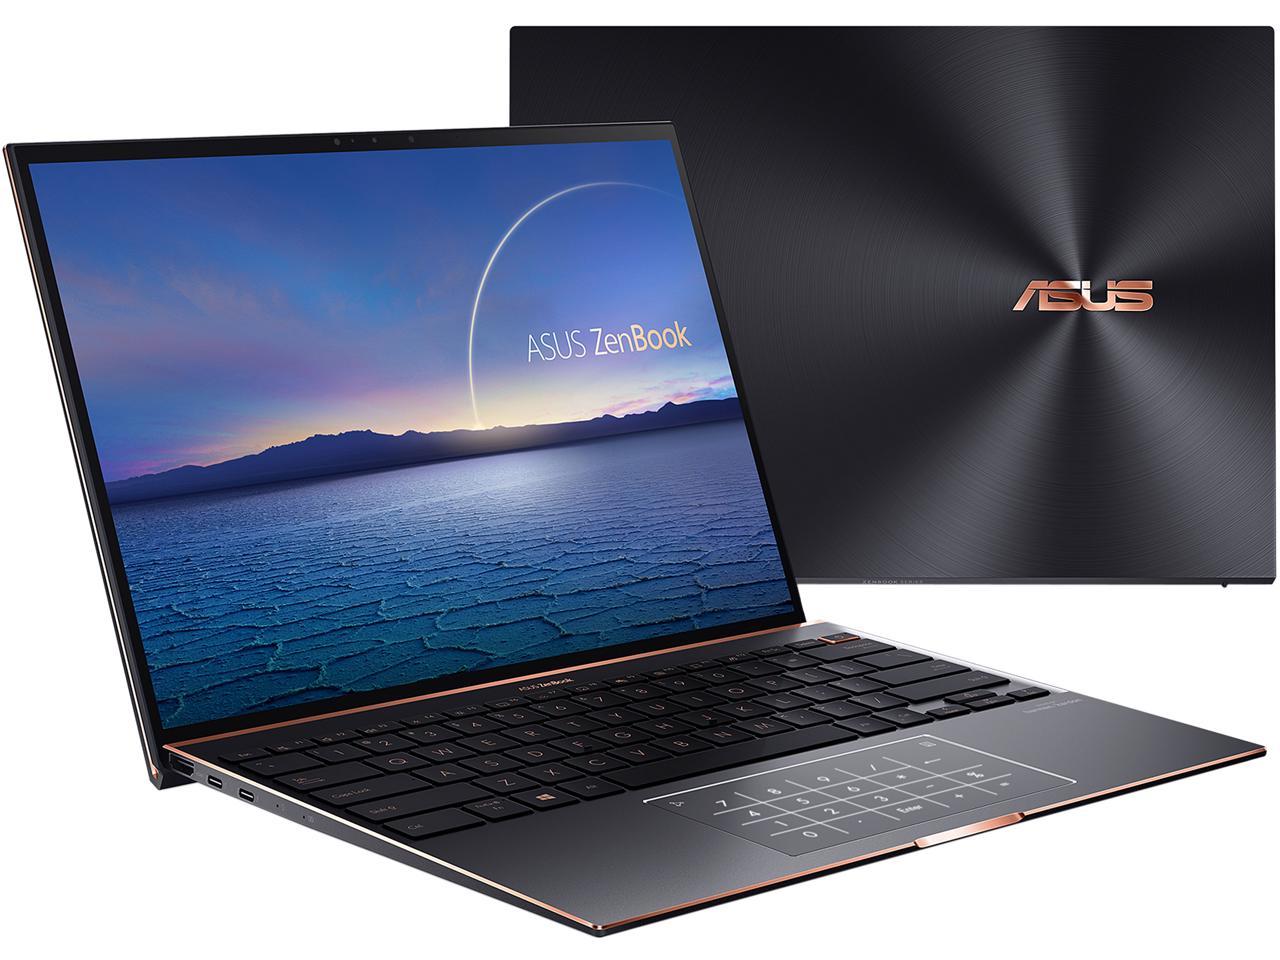 ASUS ZenBook S Ultra Slim Laptop, 13.9" 3300x2200 3:2 500nits Touch Display, Intel Evo Platform Core i7-1165G7 CPU, 16GB RAM, 1TB SSD, Thunderbolt 4, TPM, Windows 10 Pro, Jade Black, UX393EA-XB77T